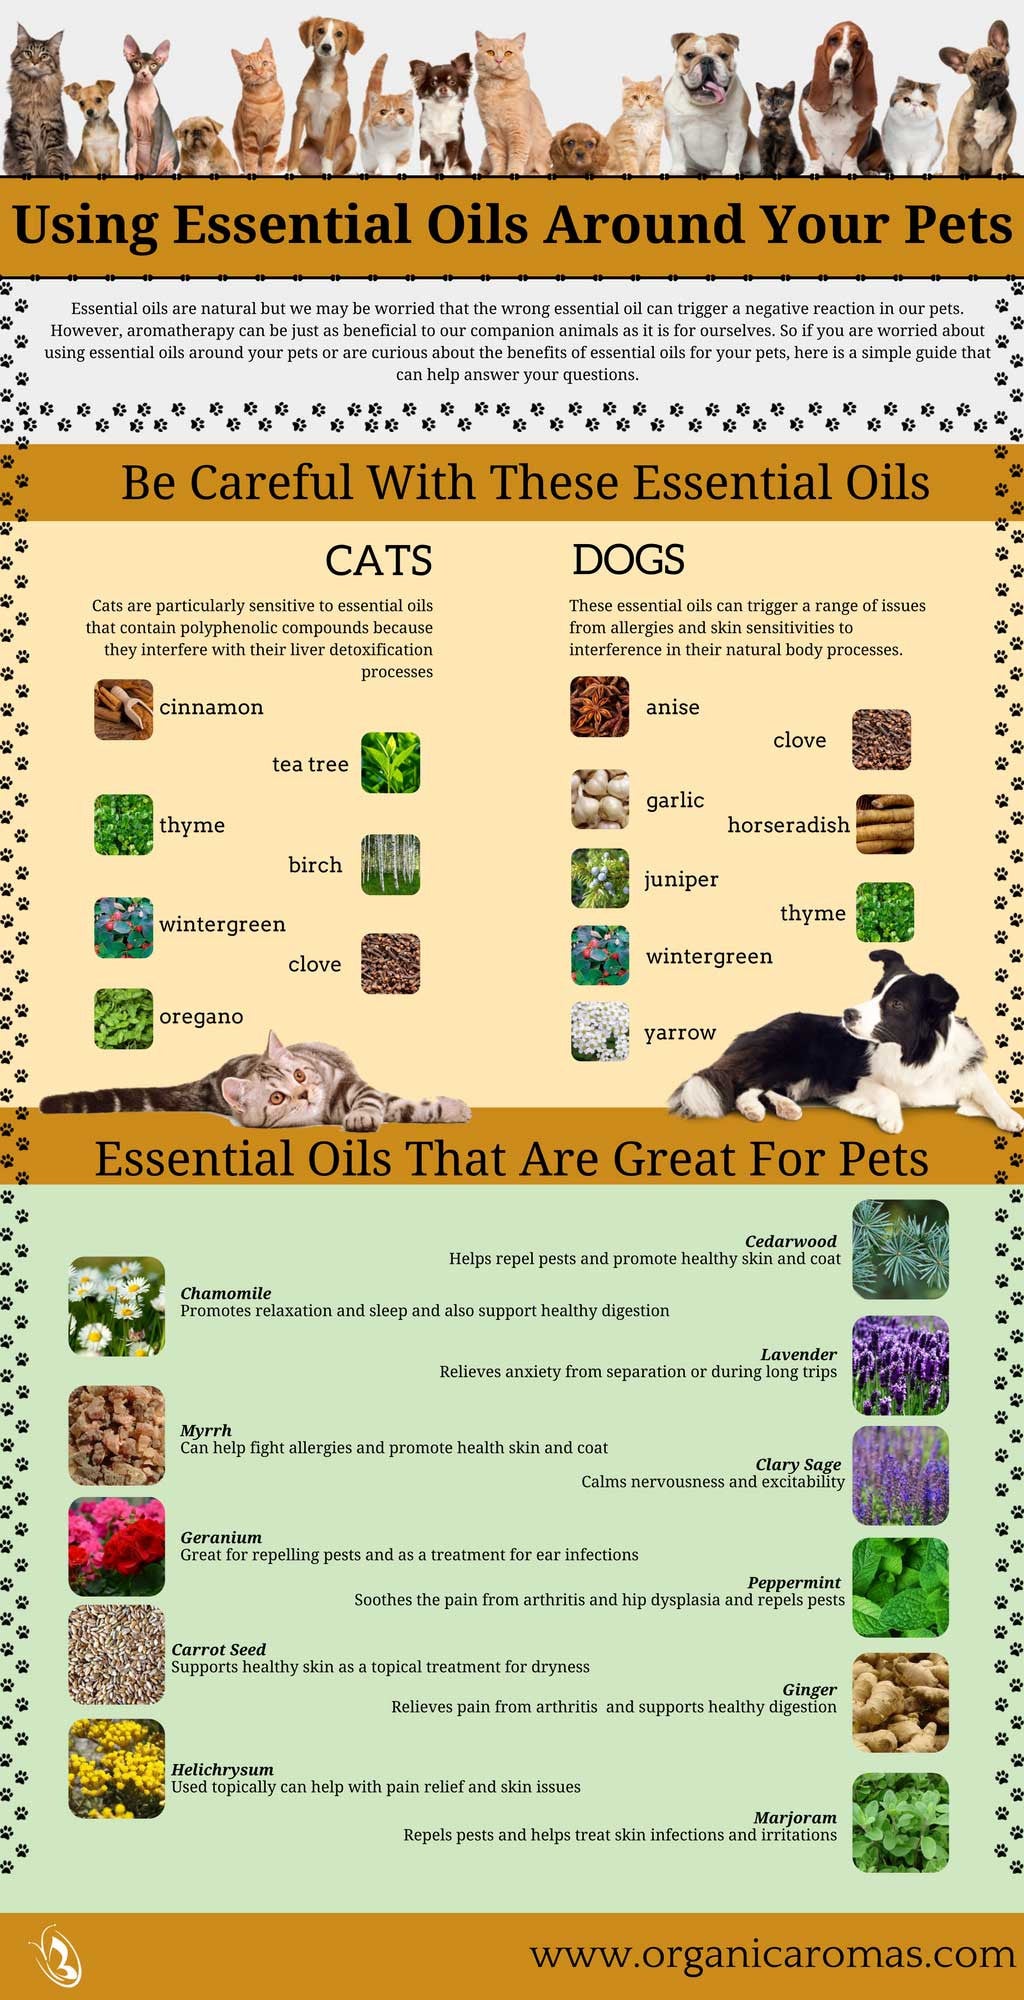 Using Essential Oils Around Pets Info-graphic